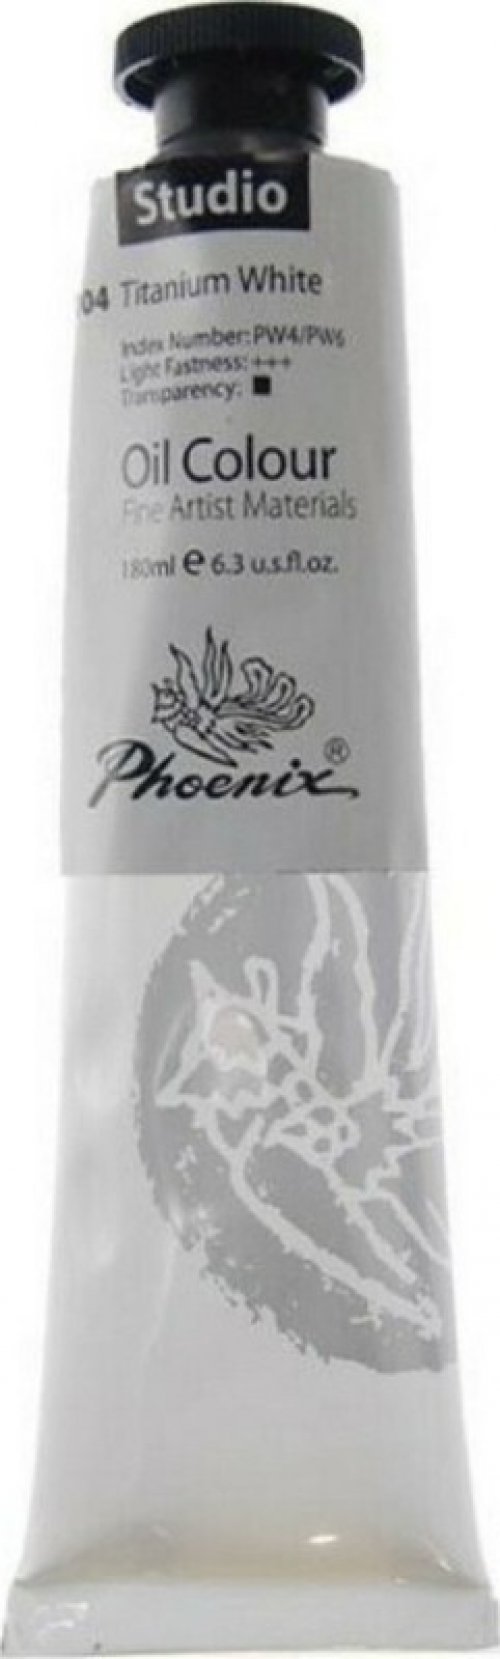 Phoenix χρώμα λαδιού titanium white 180ml